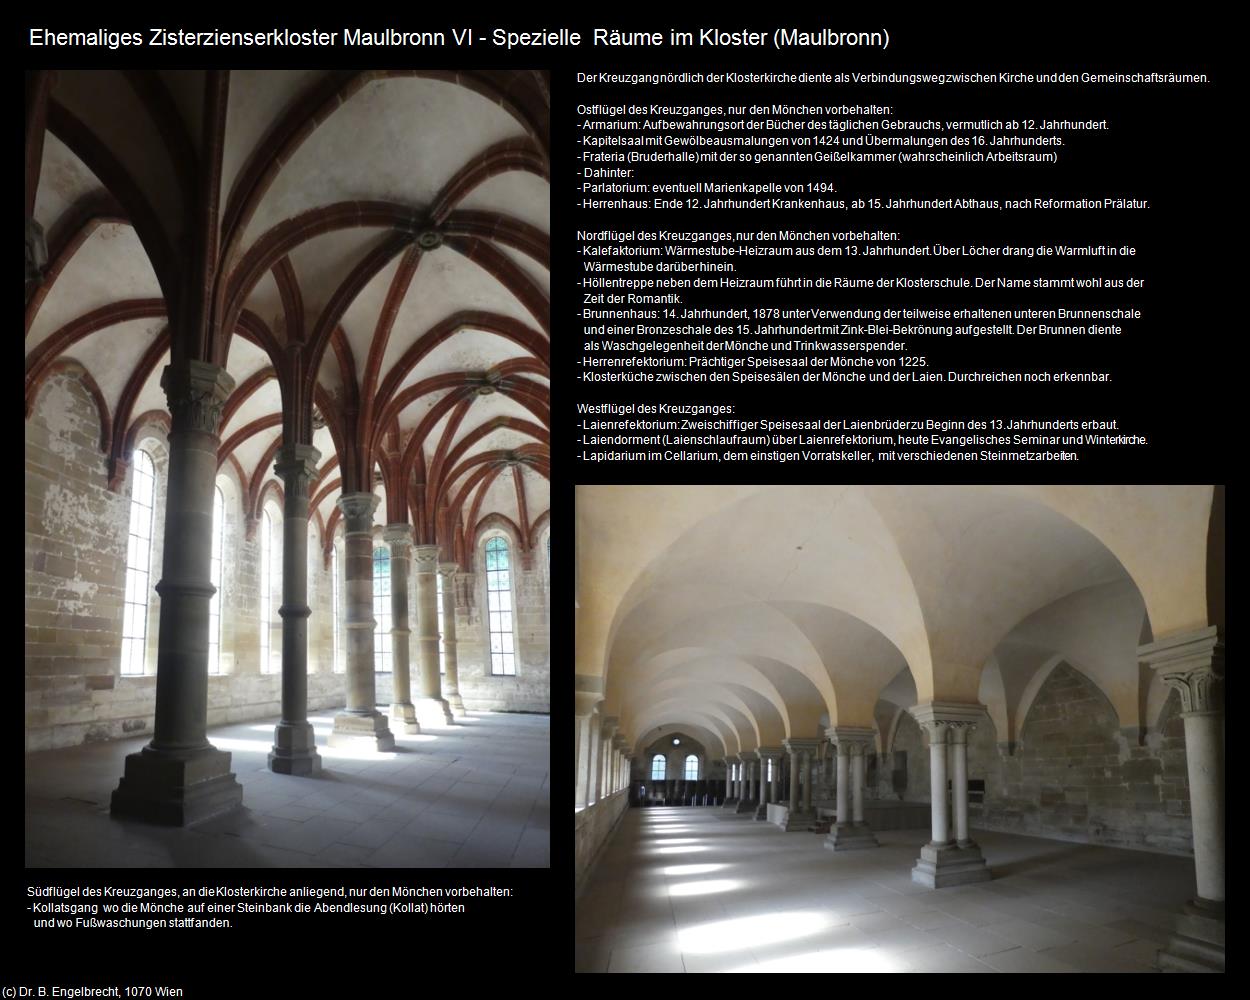 Spezielle Räume im Kloster VI (Maulbronn) in Kulturatlas-BADEN-WÜRTTEMBERG